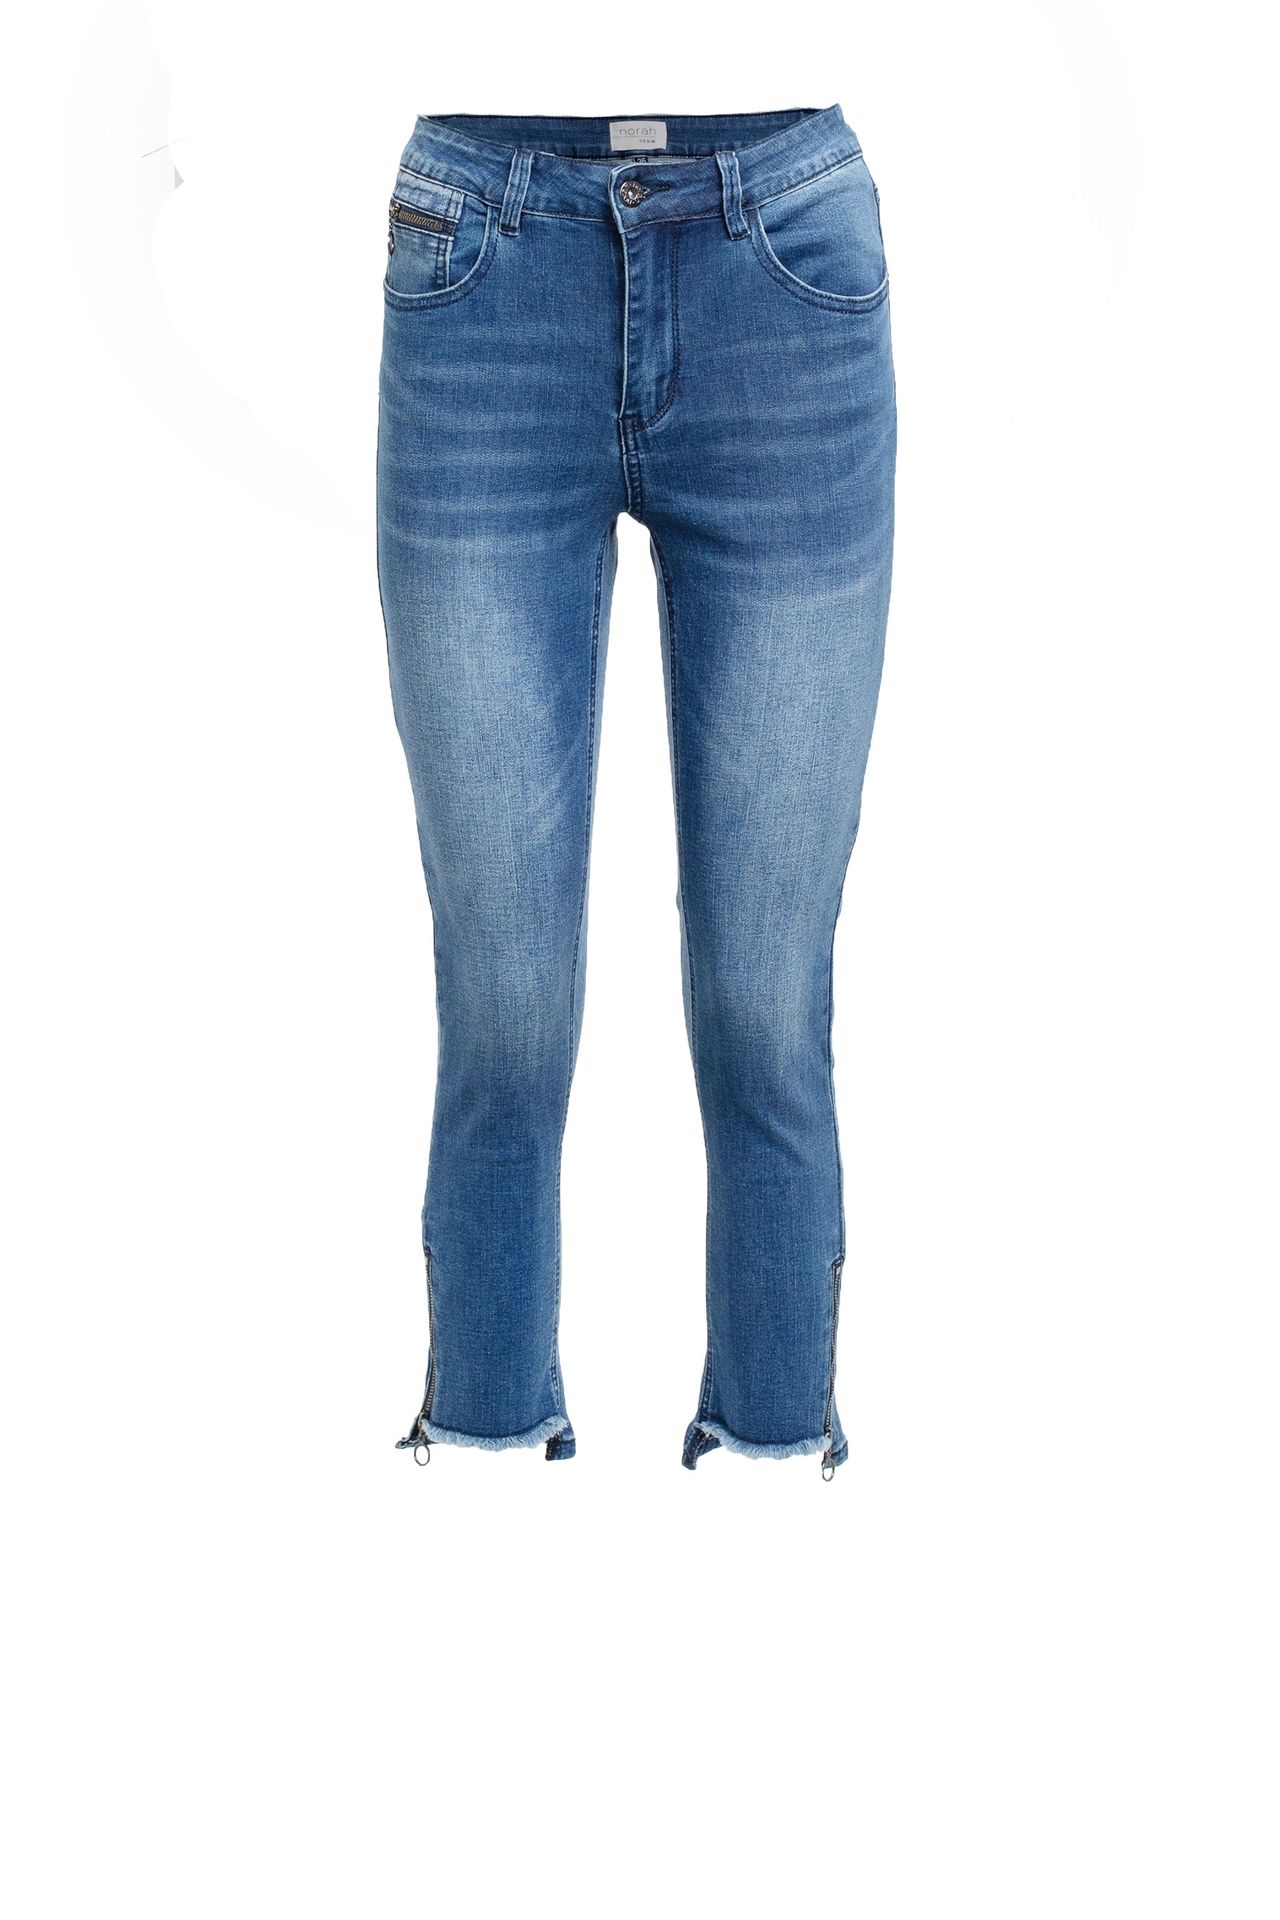 Norah Denim jeans blue 210850-400